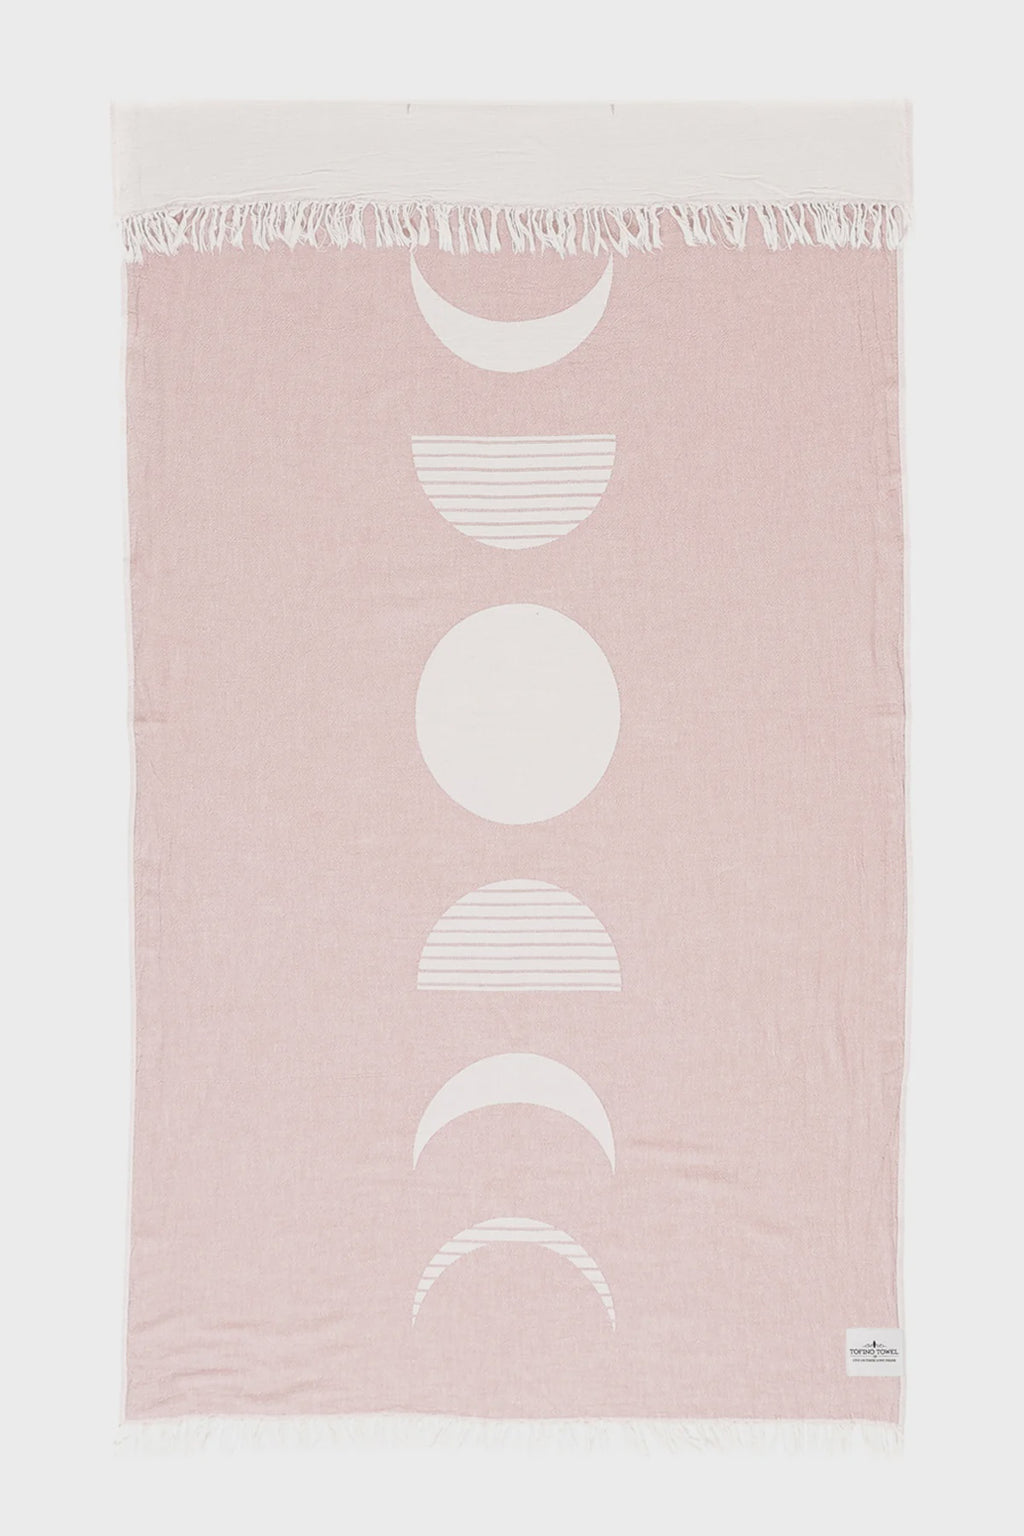 Tofino Towel - Moon Phase Towel